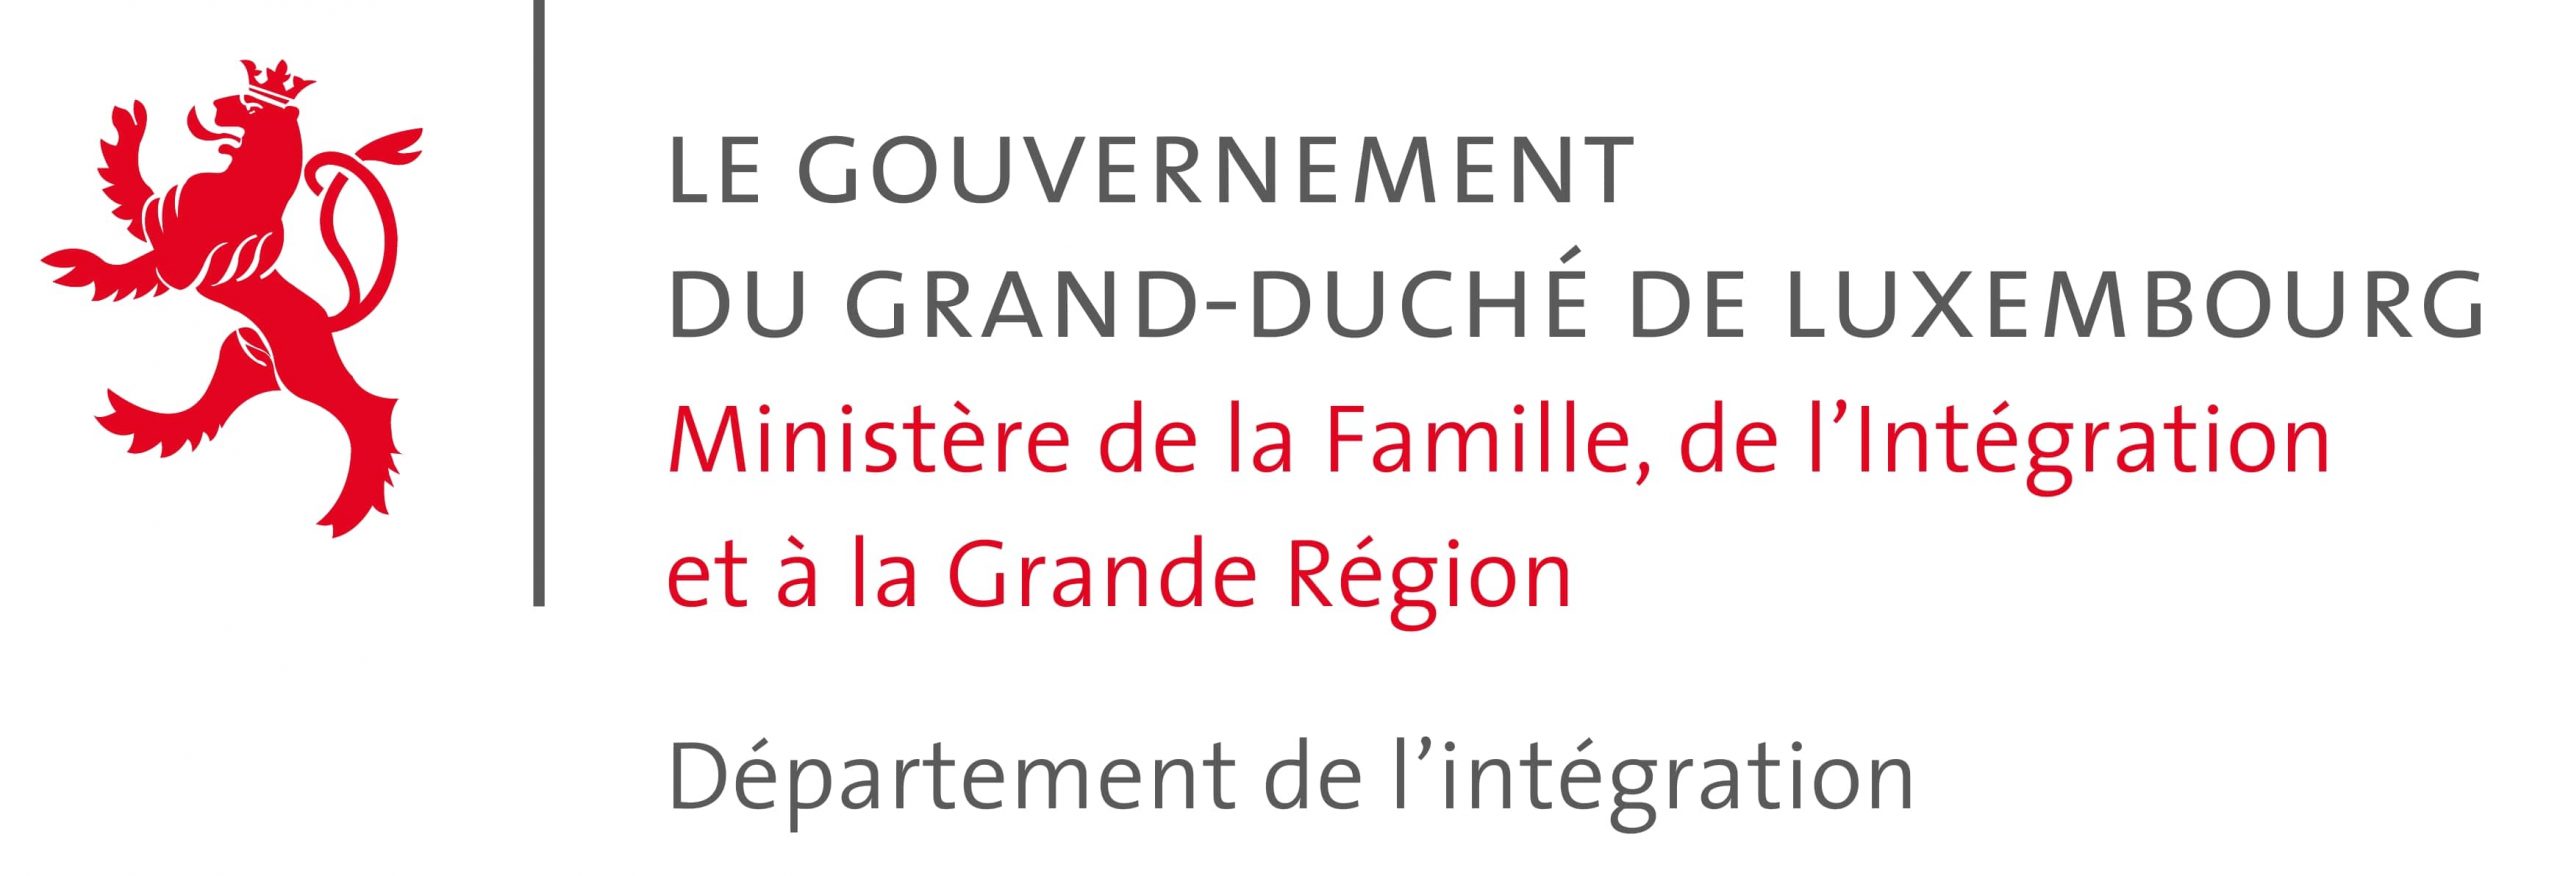 logo-gouvernement-grand-duche-luxembourg-ministere-famille-integration-grande-region